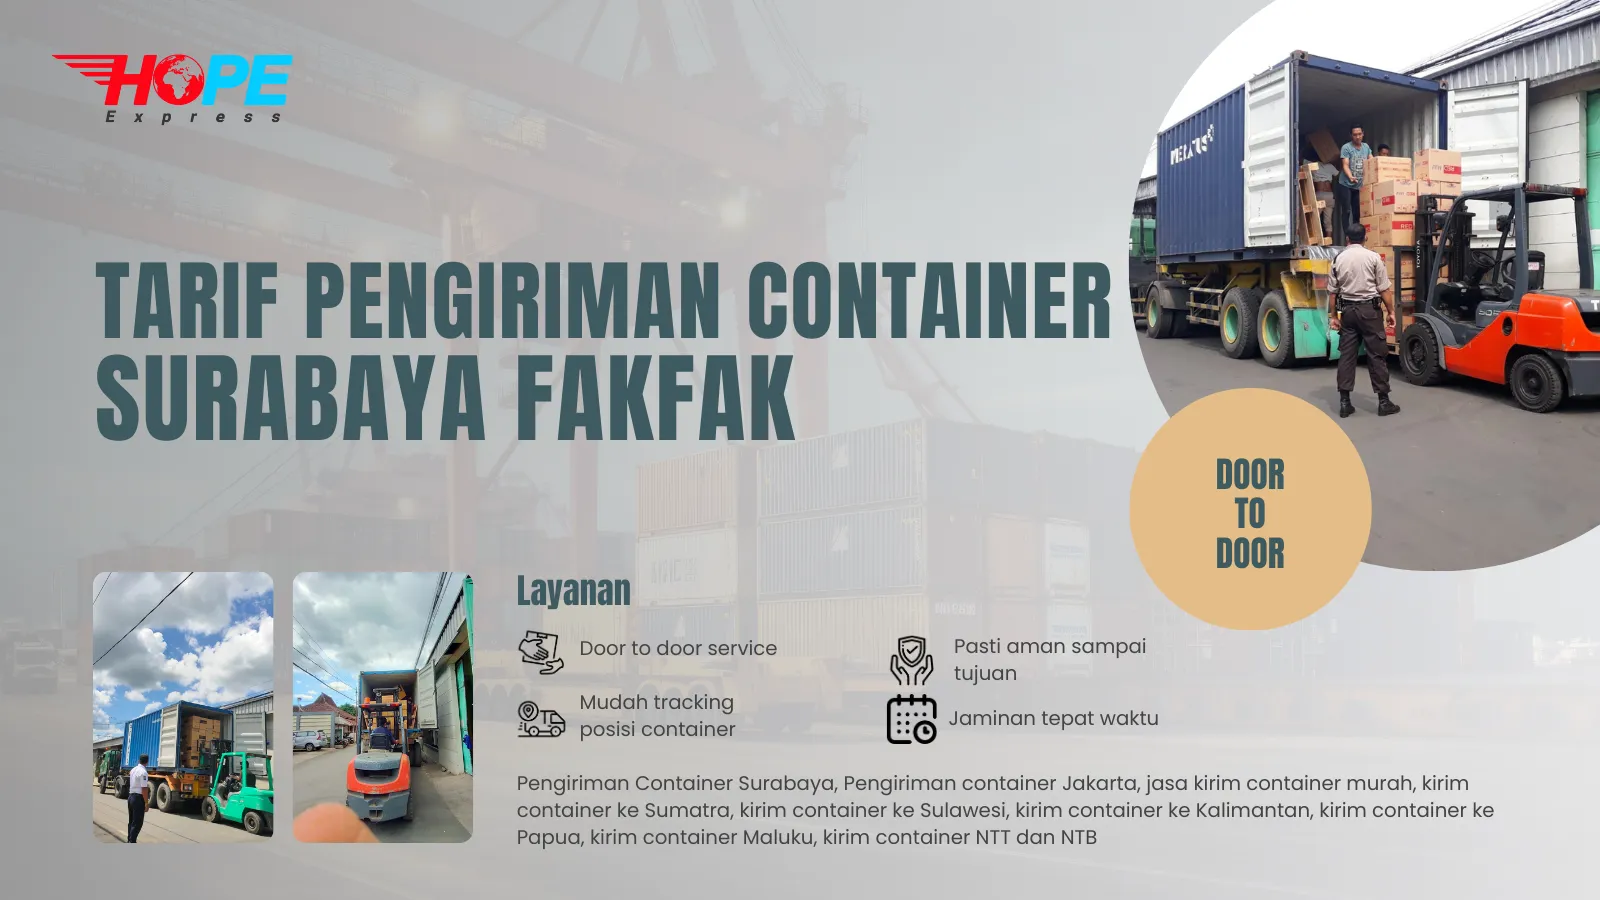 Tarif Pengiriman Container Surabaya Fakfak